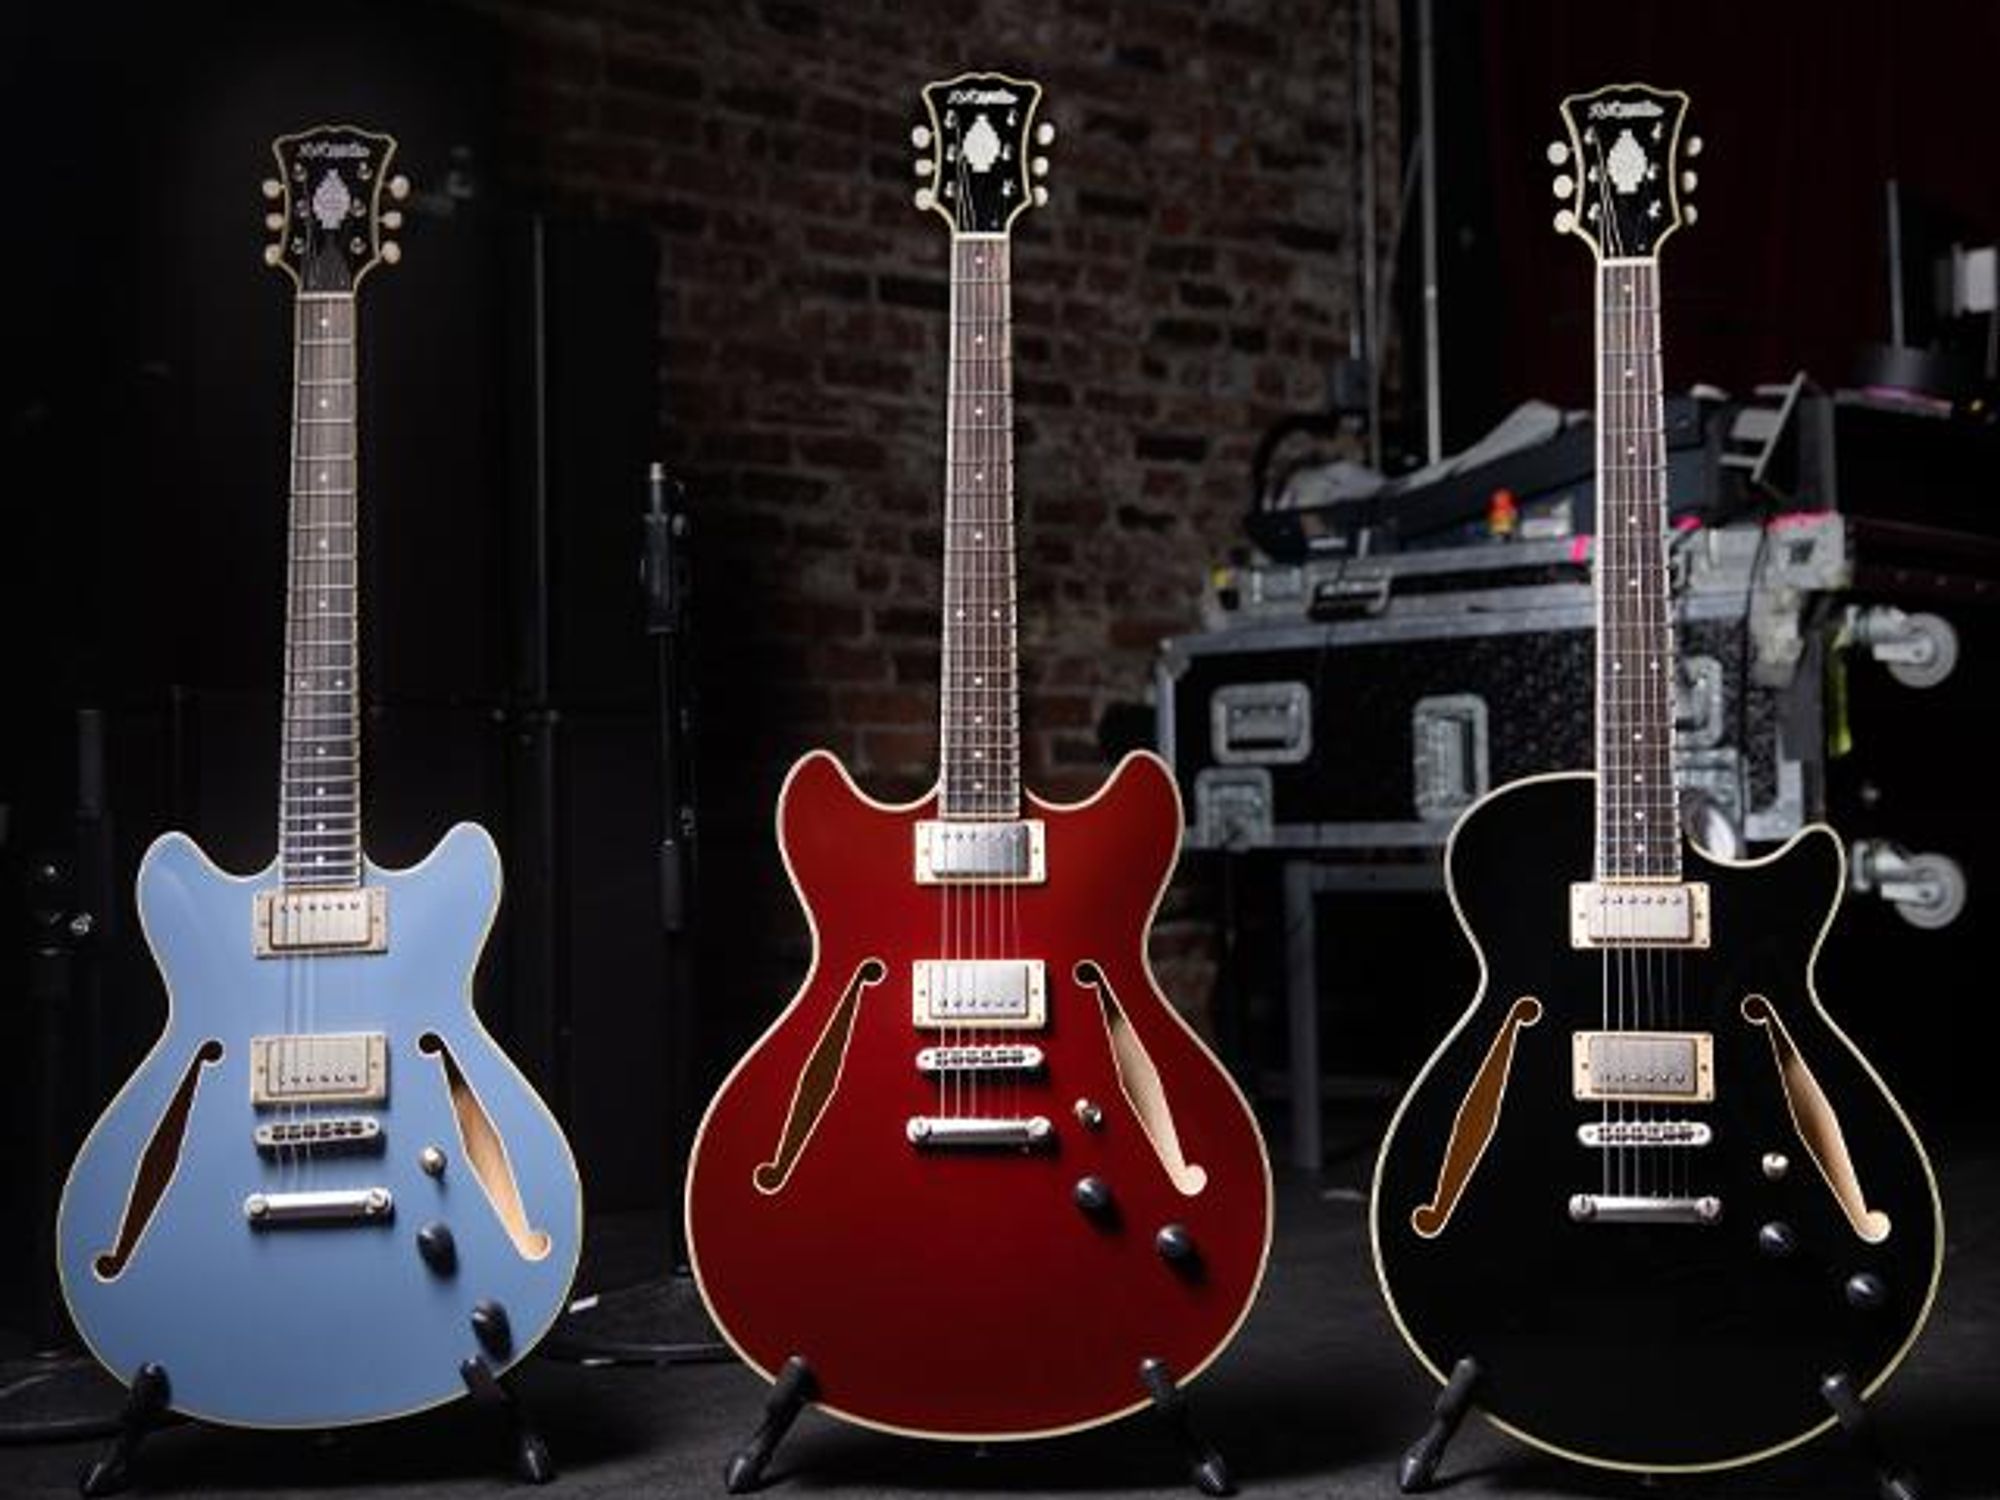 D’Angelico Guitars Announces the Excel Tour Collection